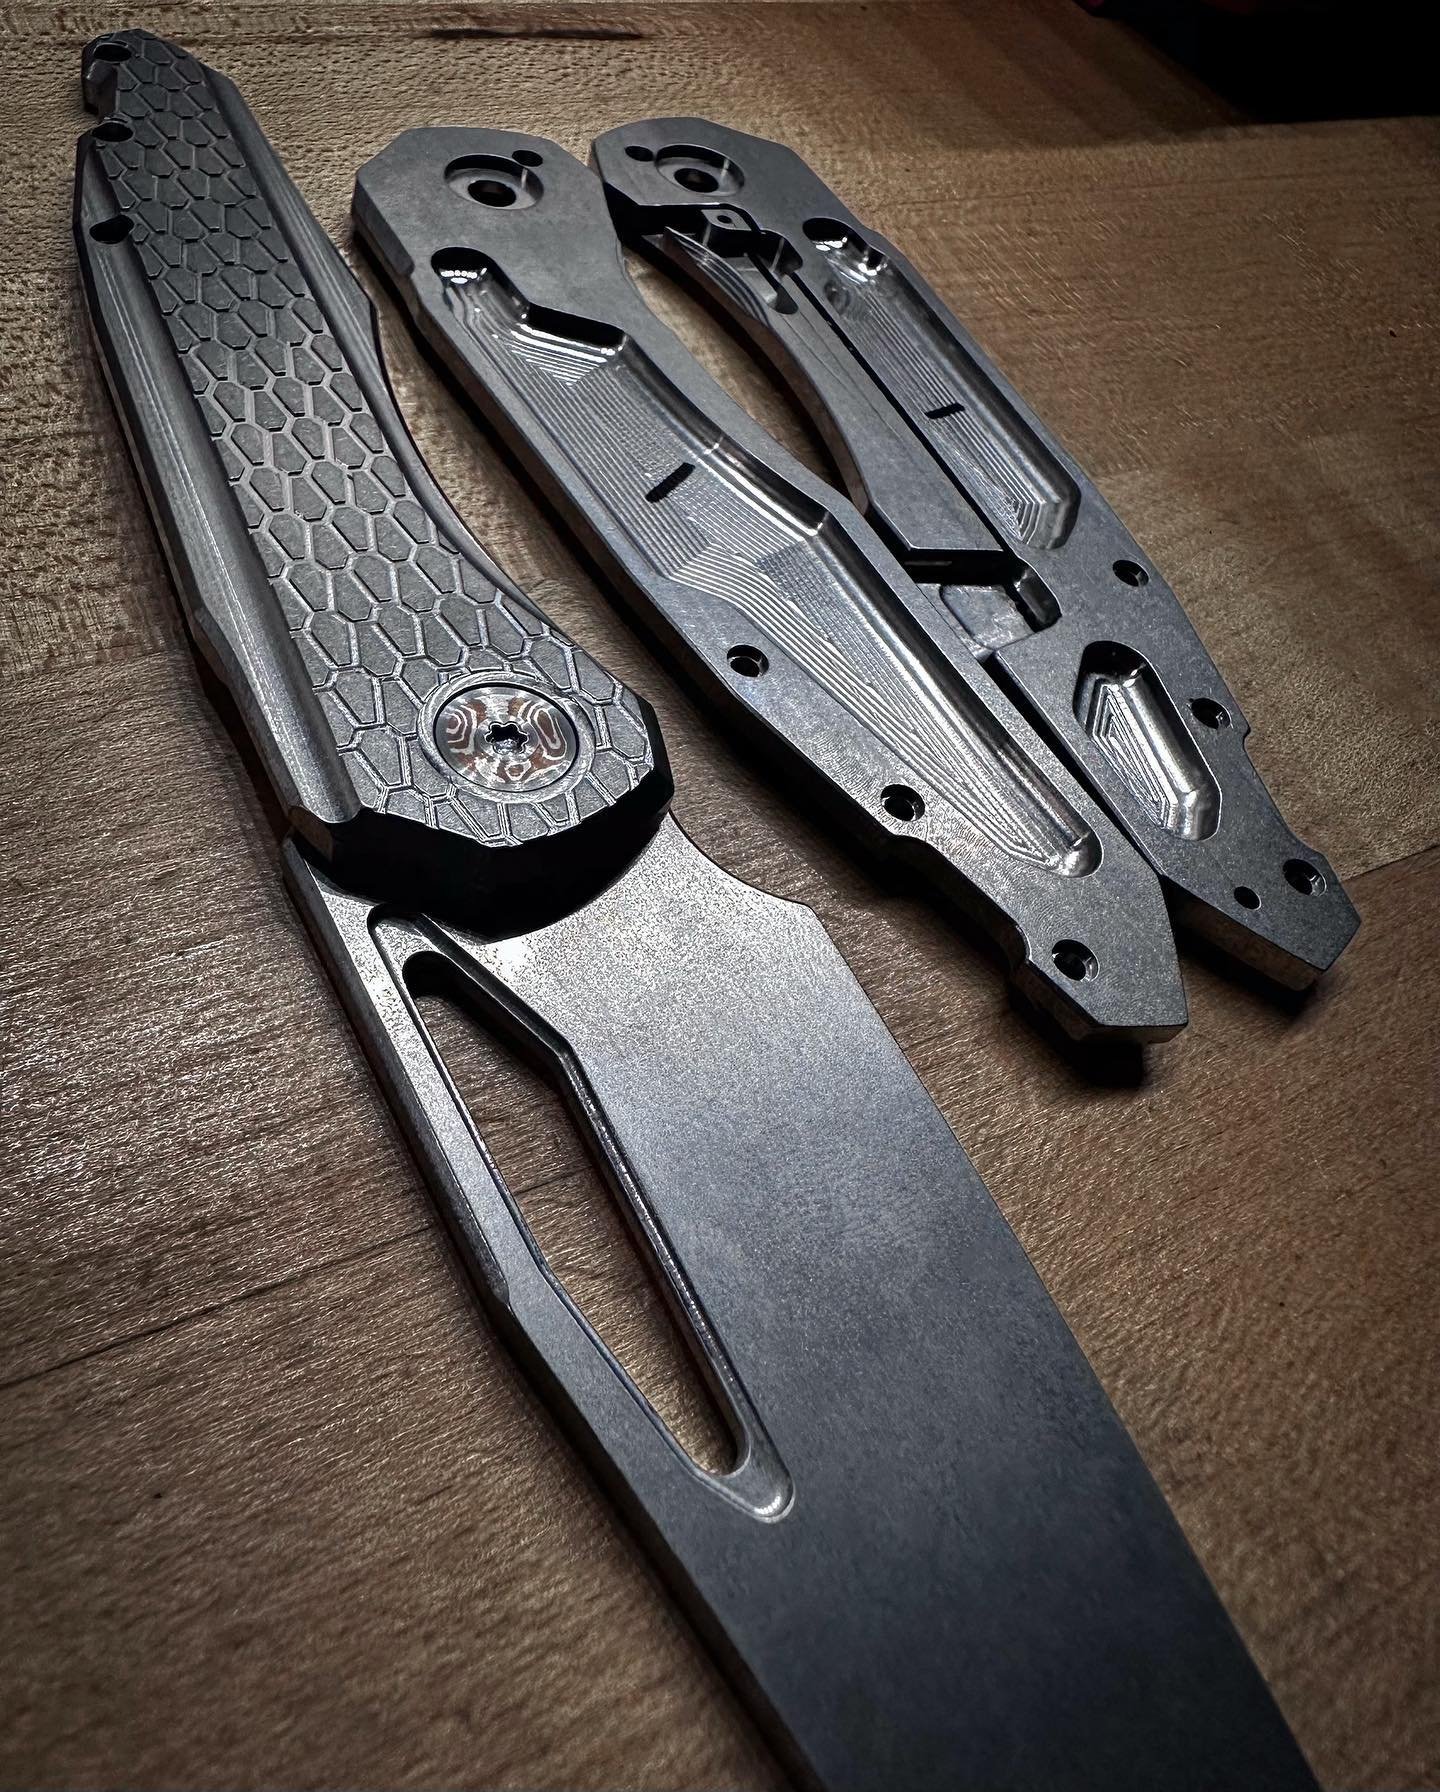 ☞ Sigil NF prototyping
.
.
.
#munroeknives #munroemade #munroemetalworks #sigil #knives #customknives